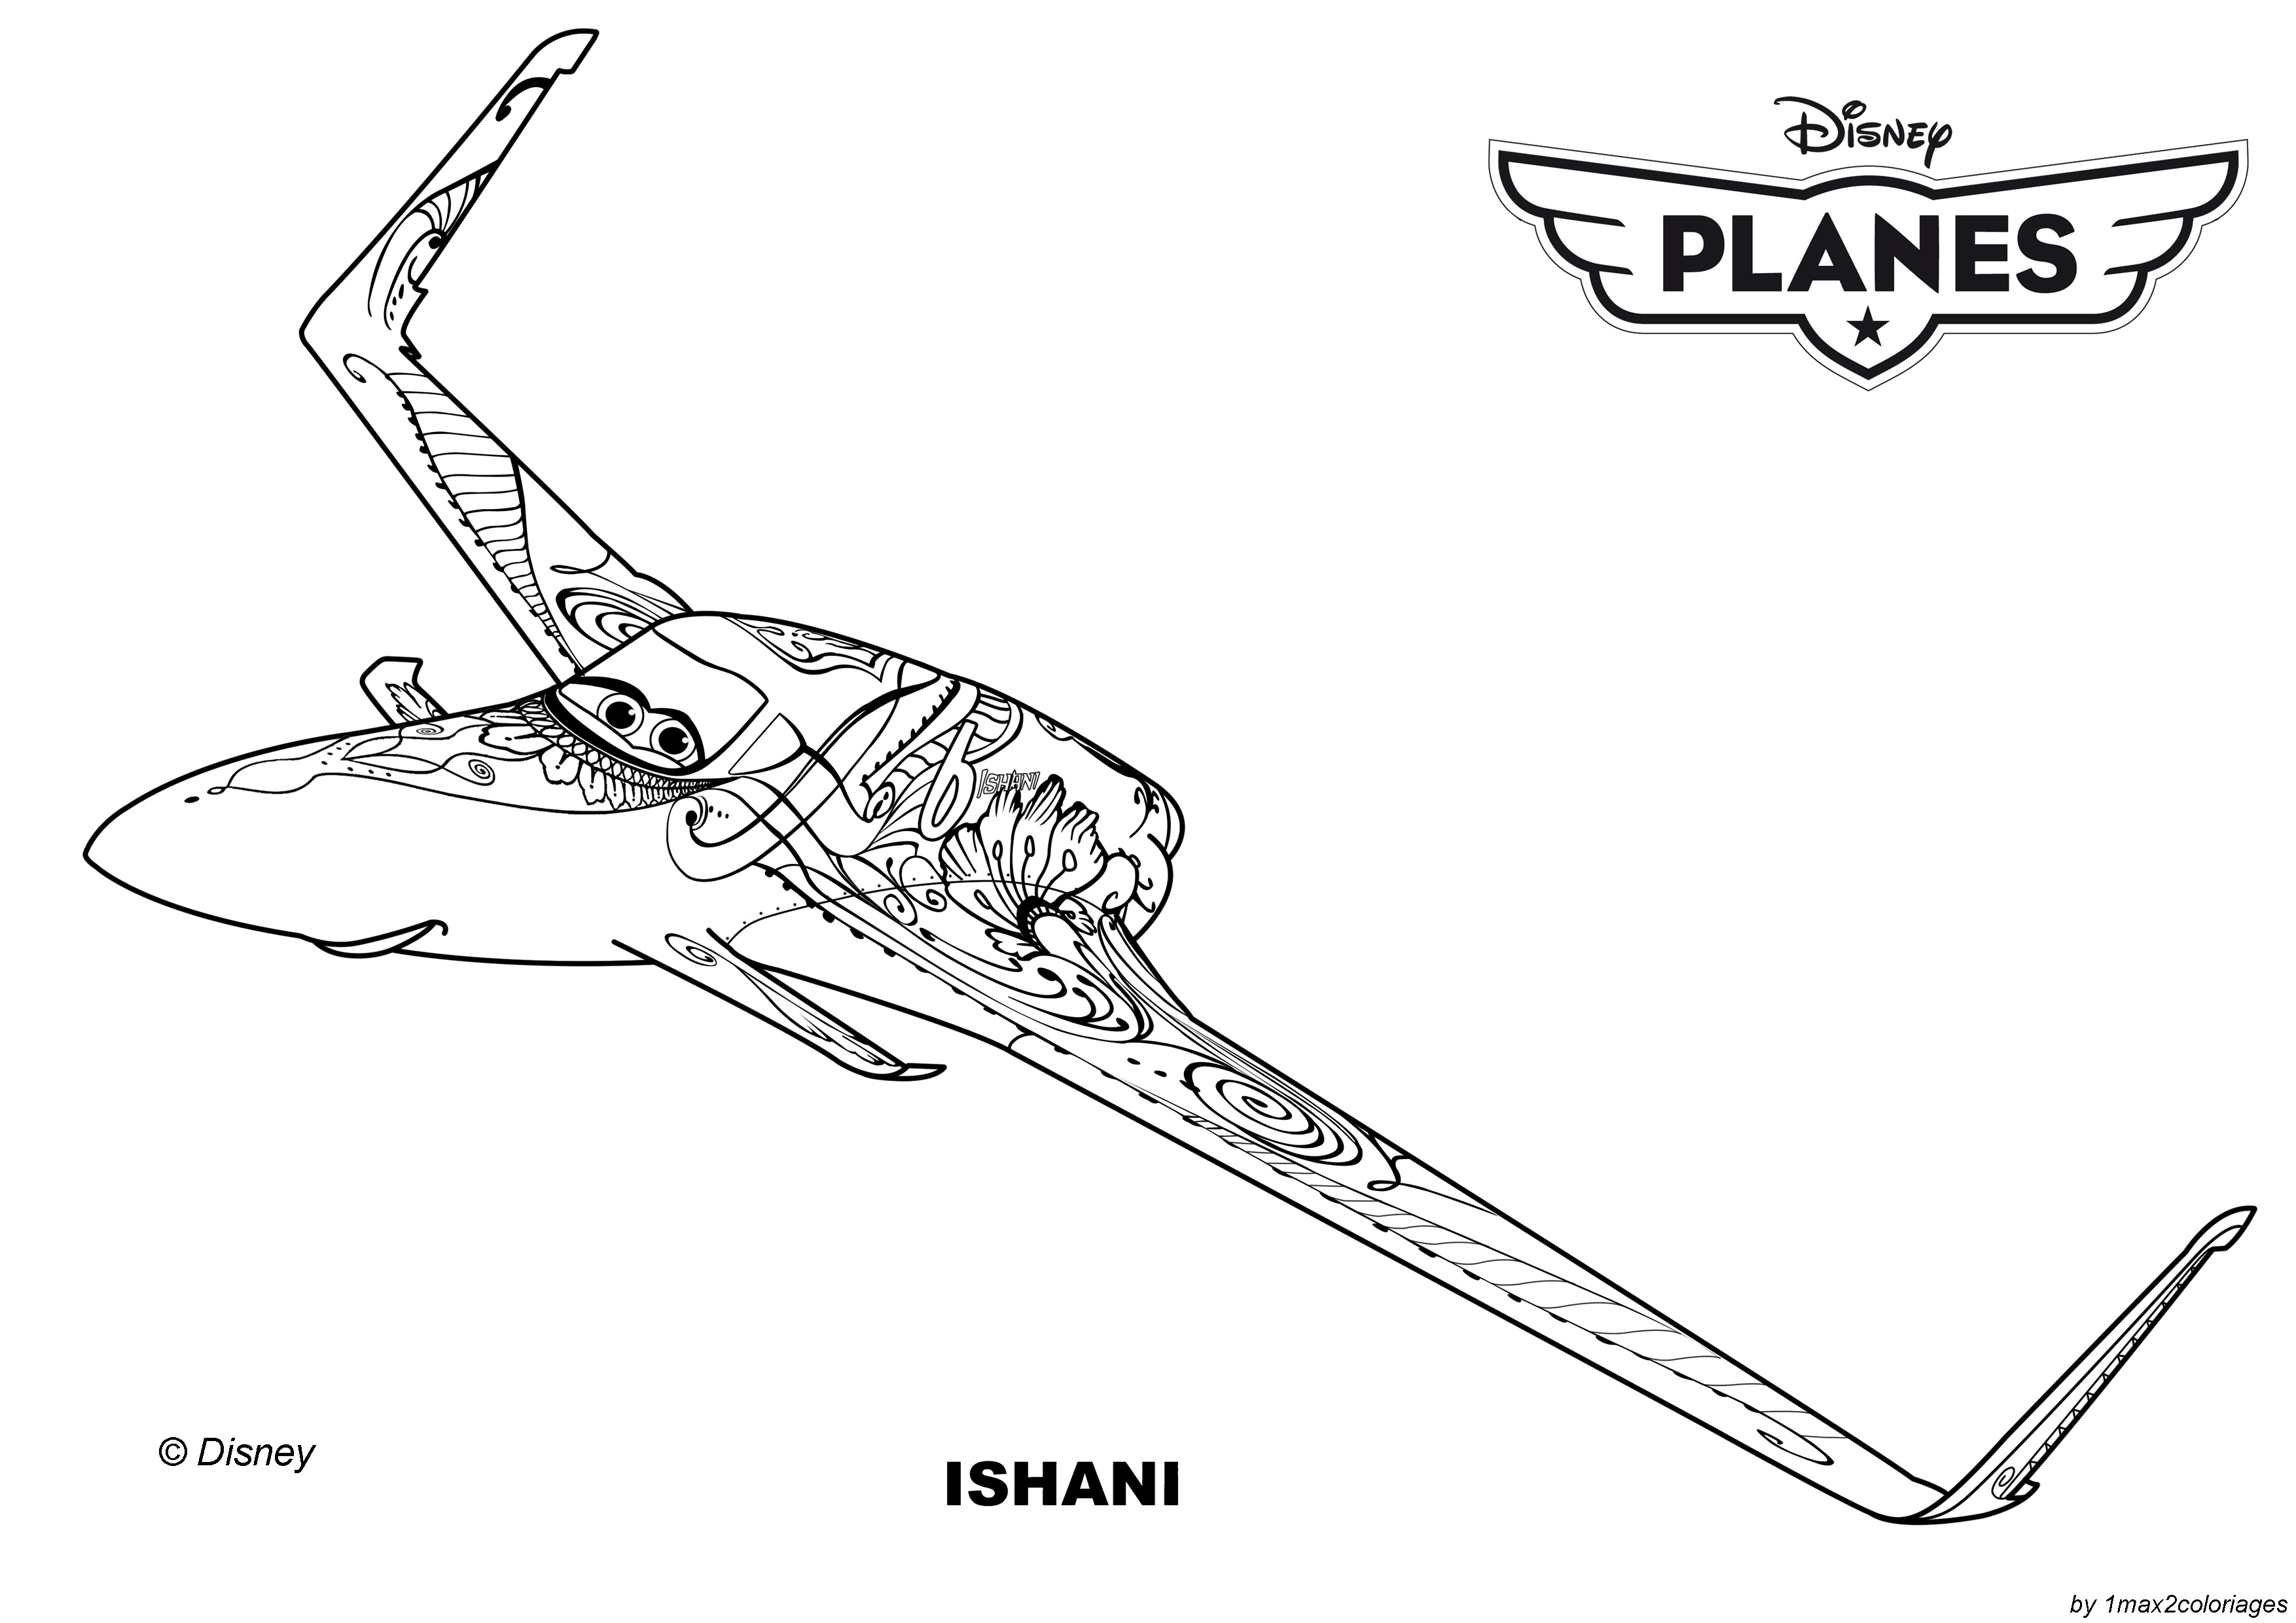 Coloriages Planes de walt Disney,Ishani, un avion de course venu d ...